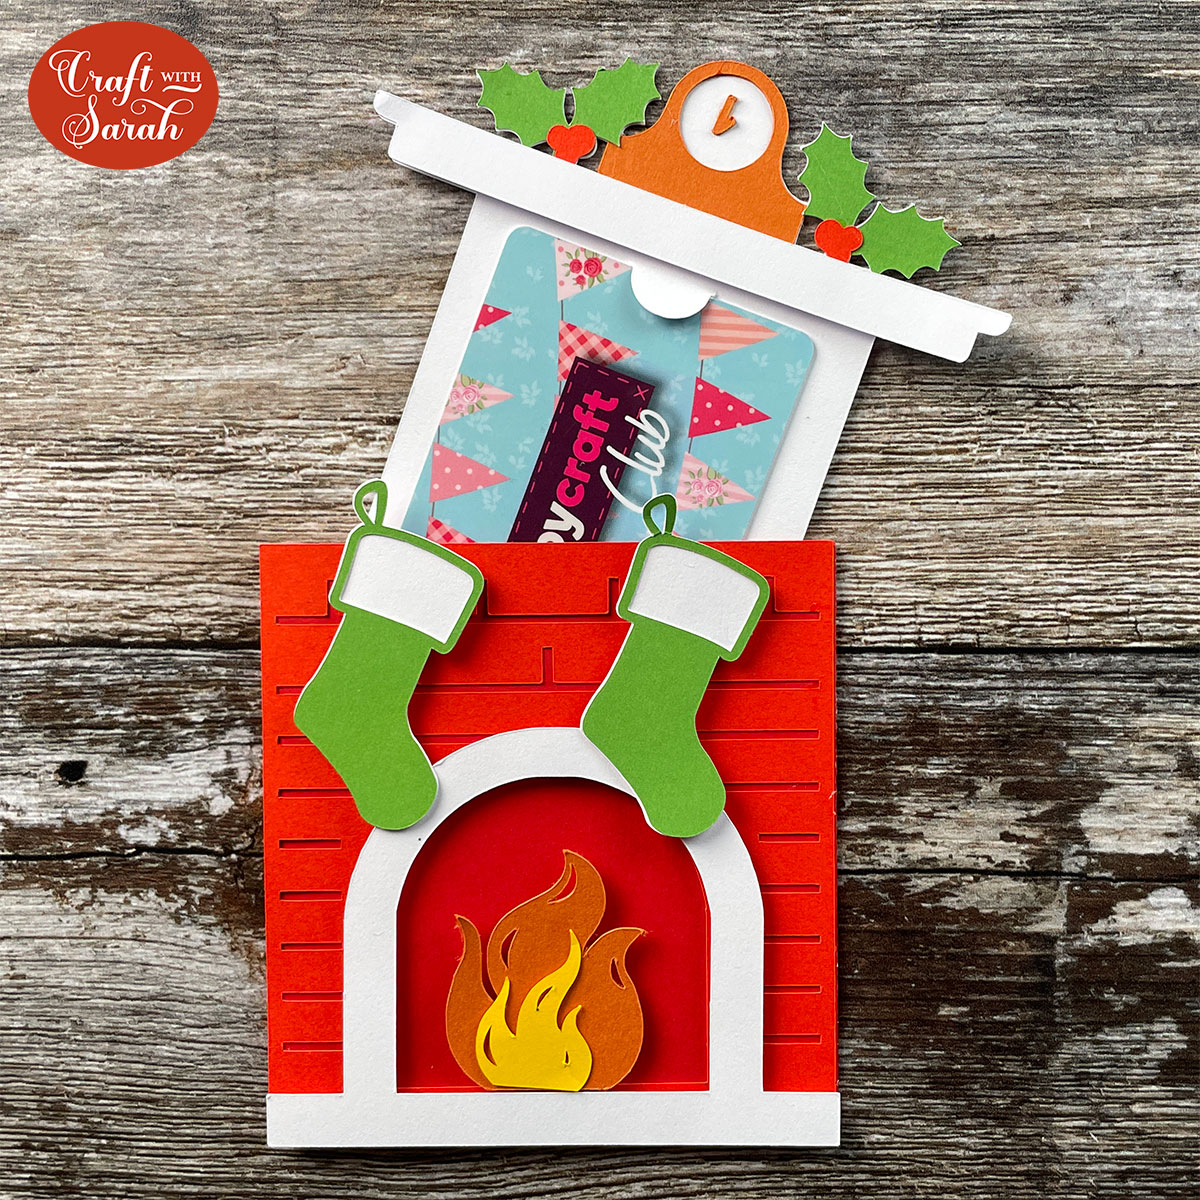 DIY Gift Card Holder 💰 Make a Christmas Gift Card Wallet - Craft with Sarah